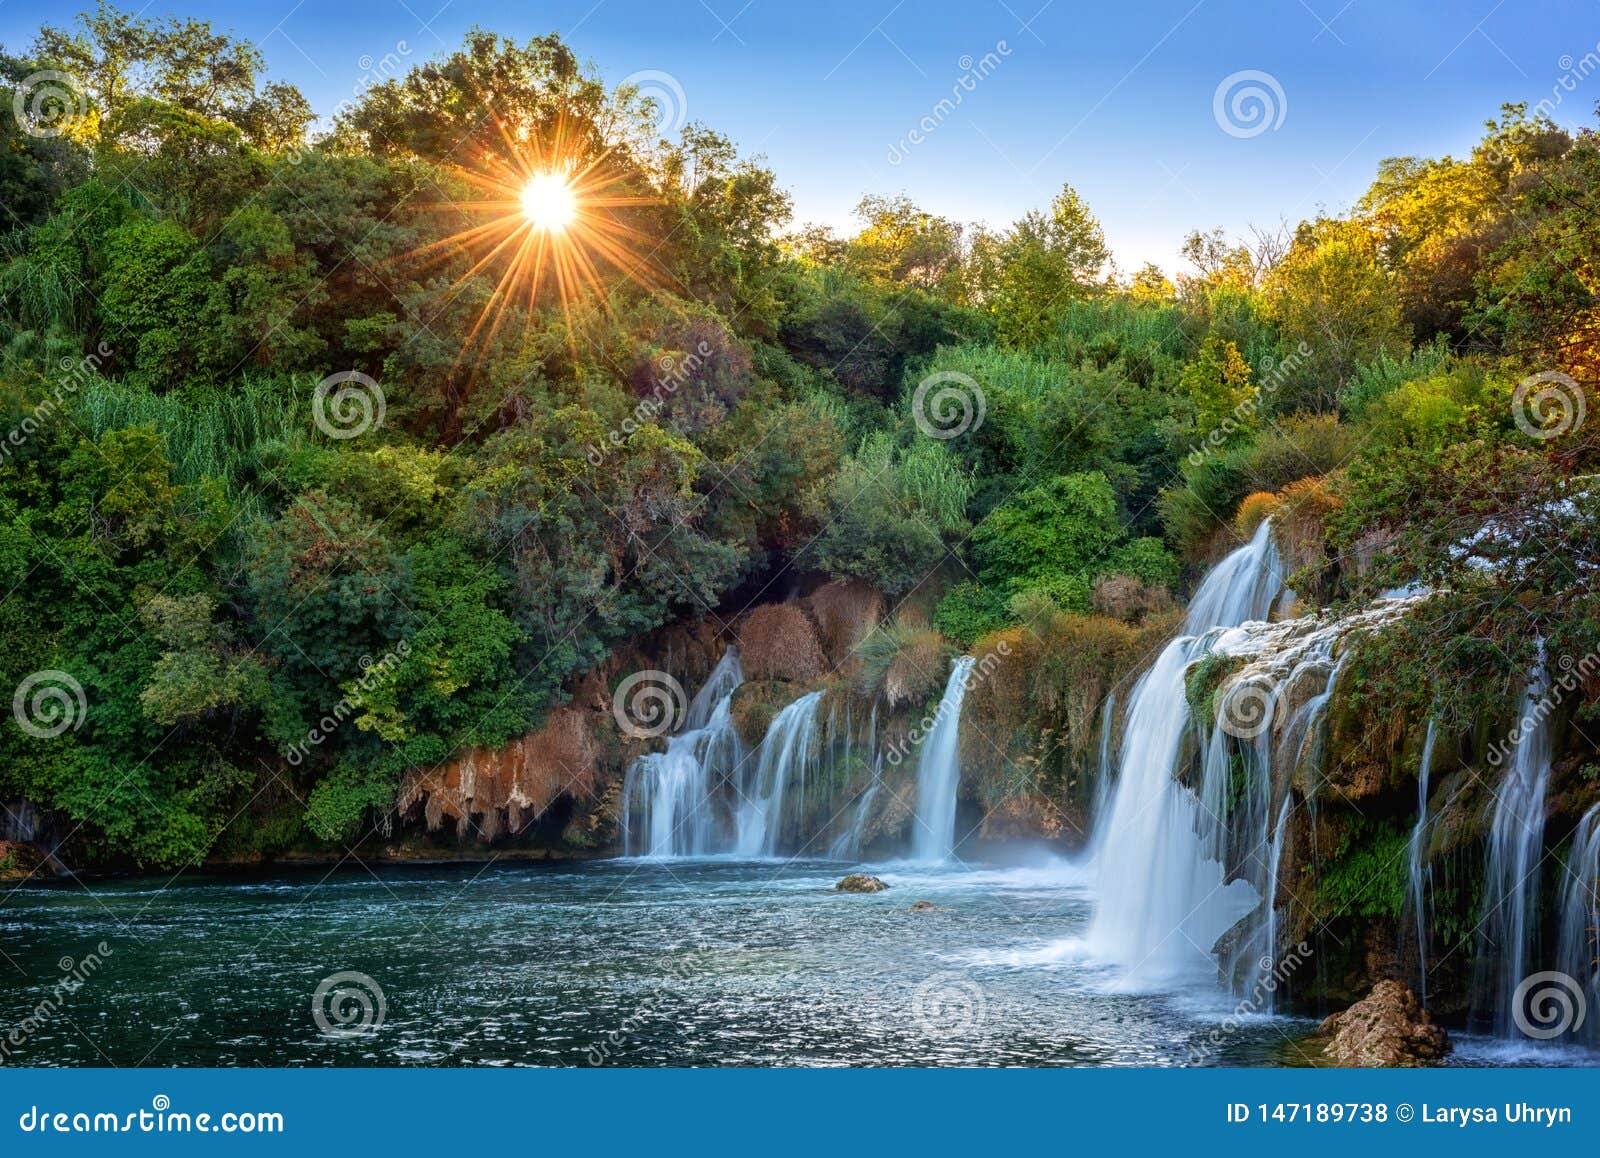 amazing nature landscape, famous waterfall skradinski buk at sunrise, croatia, outdoor travel background